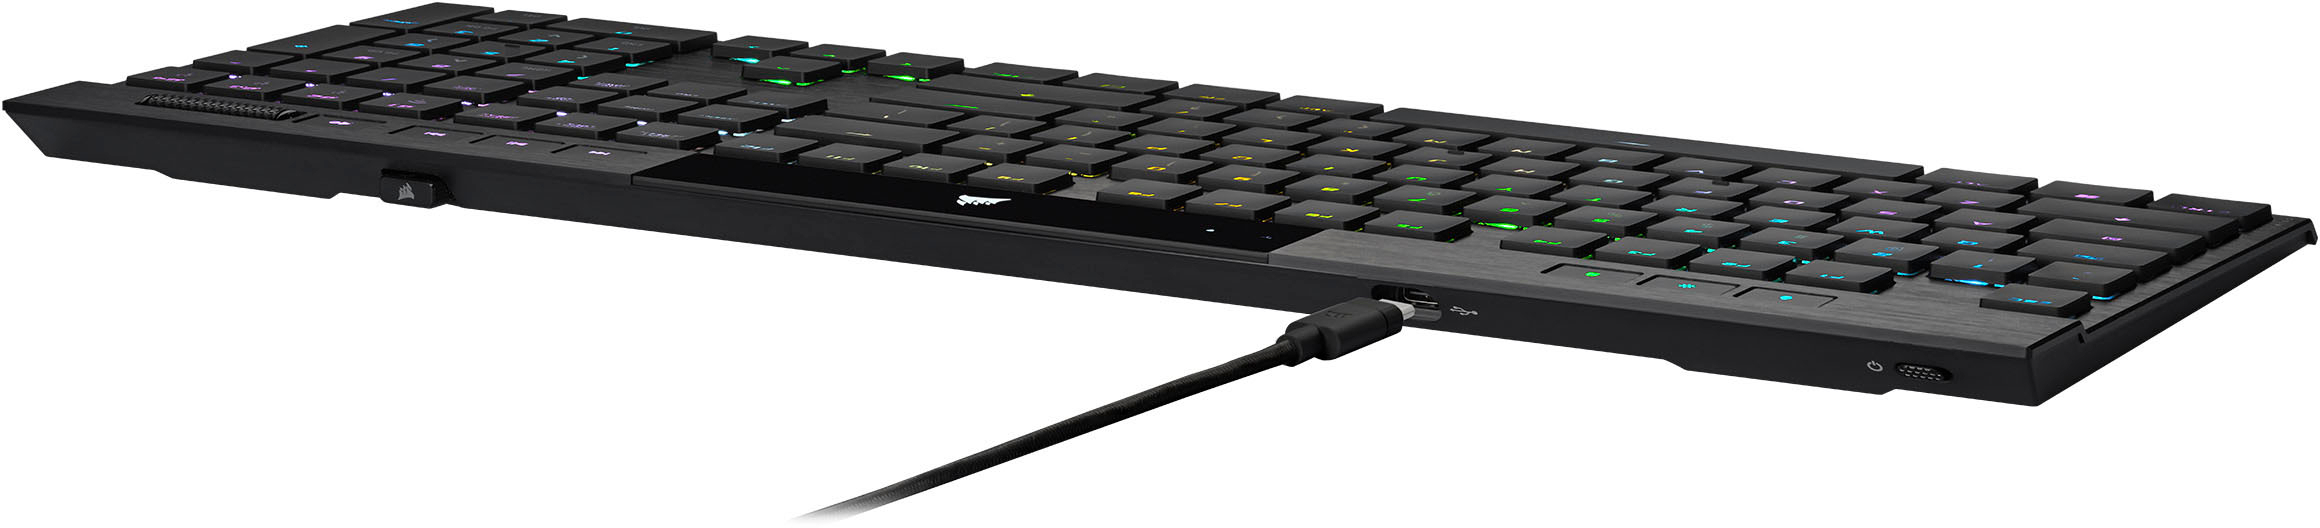 Corsair K100 AIR WIRELESS RGB mécanique ultra-mince, clavier gaming Noir,  Layout États-Unis, Cherry MX